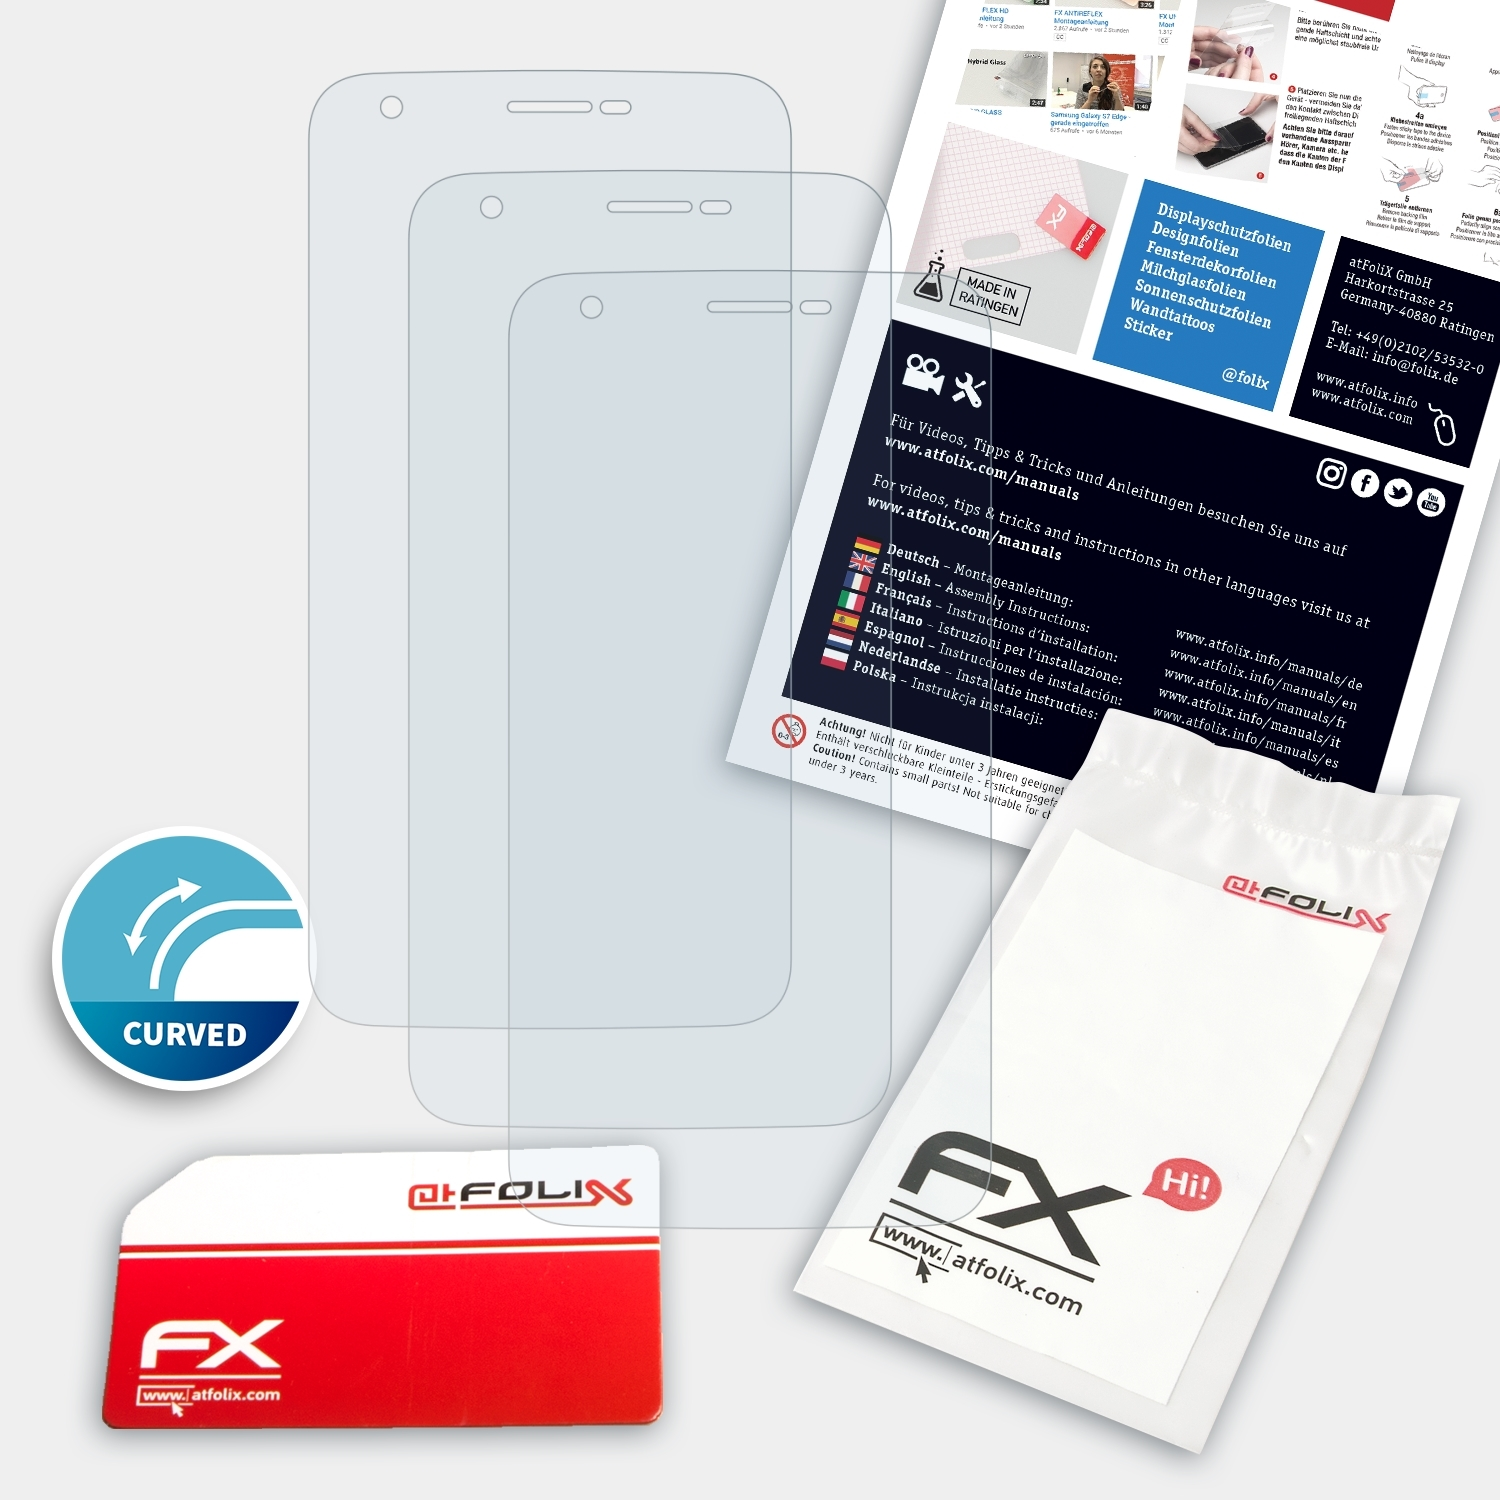 ATFOLIX 3x FX-ActiFleX Displayschutz(für Y100 Doogee Plus)